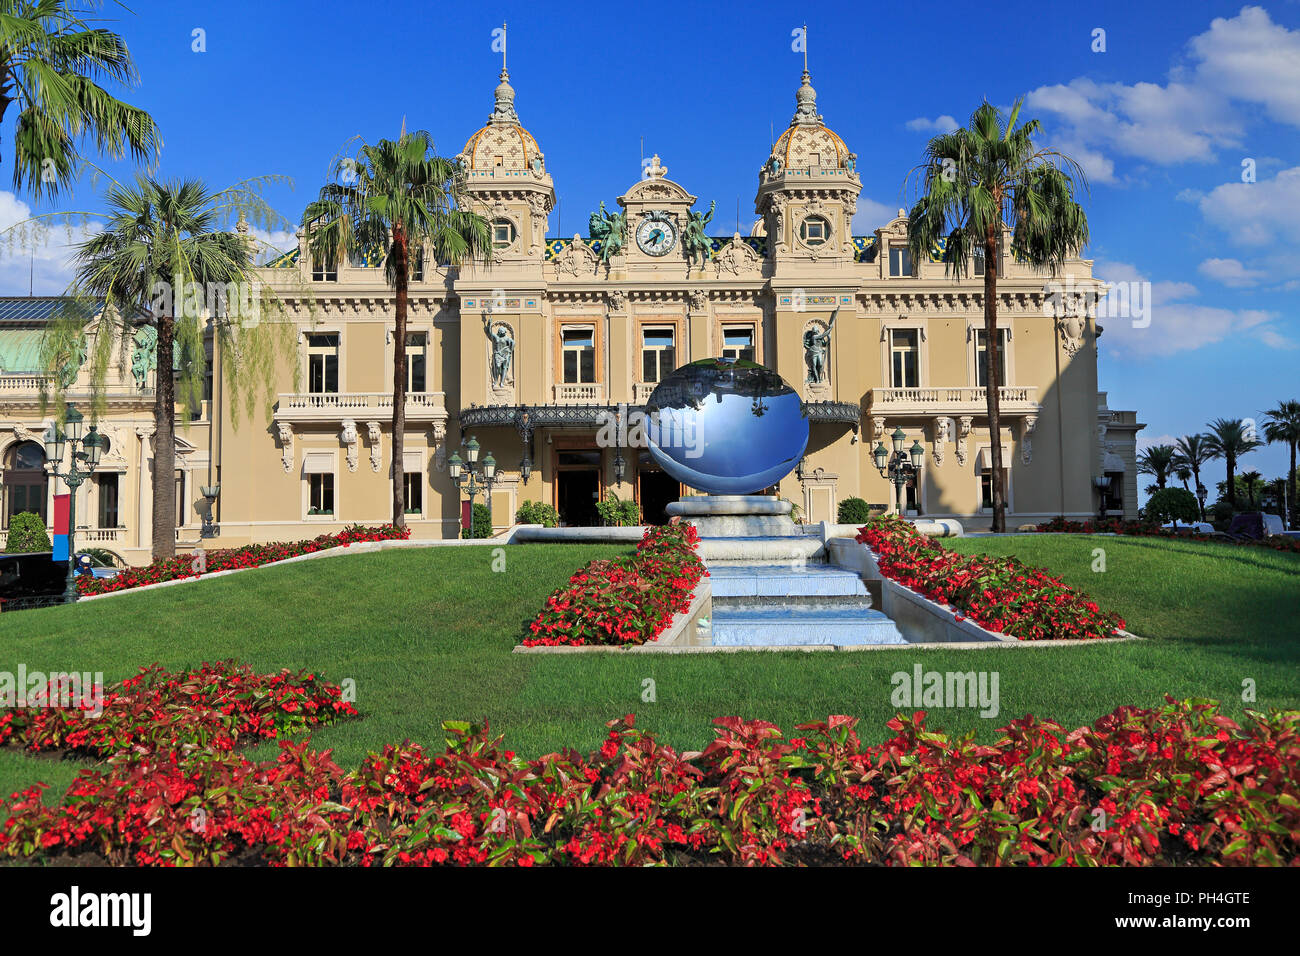 The Grand Casino in Monte Carlo, gambling and entertainment complex in Cote d' Azur Stock Photo